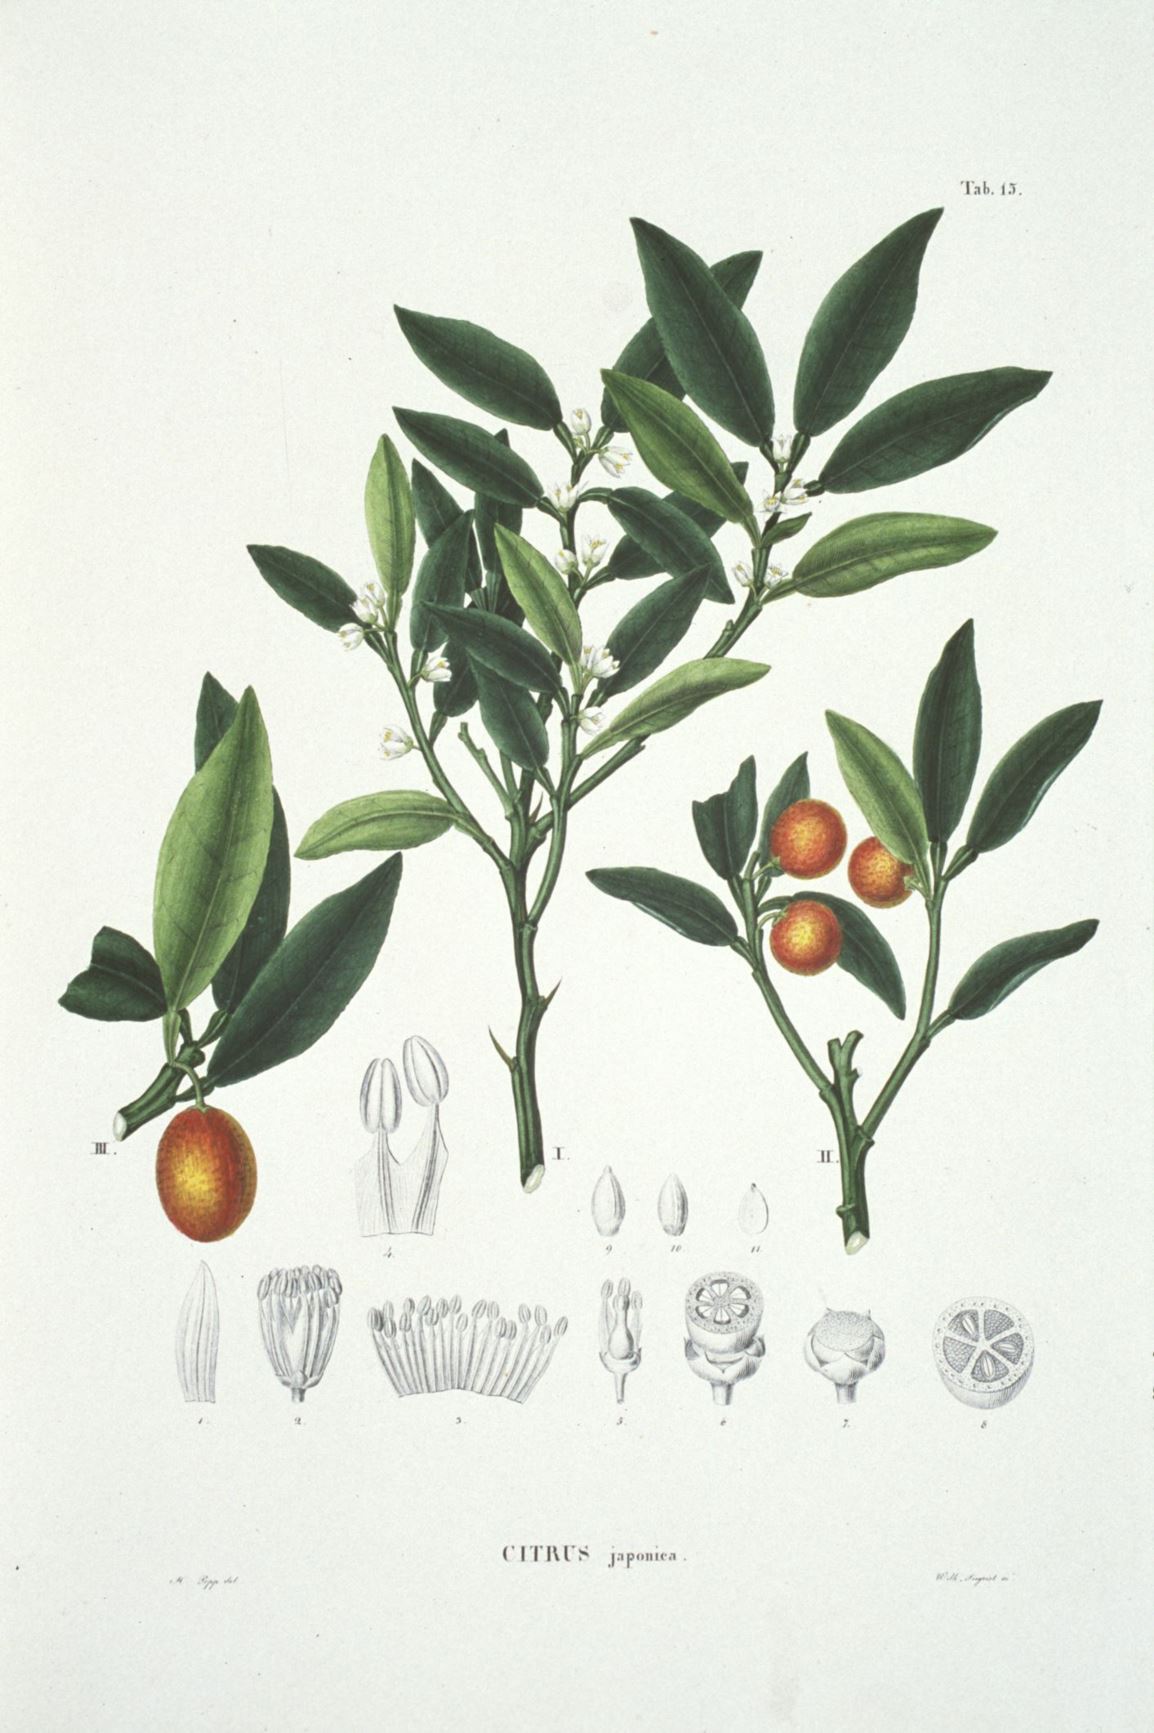 Citrus japonica - Kumquat, Kinkan